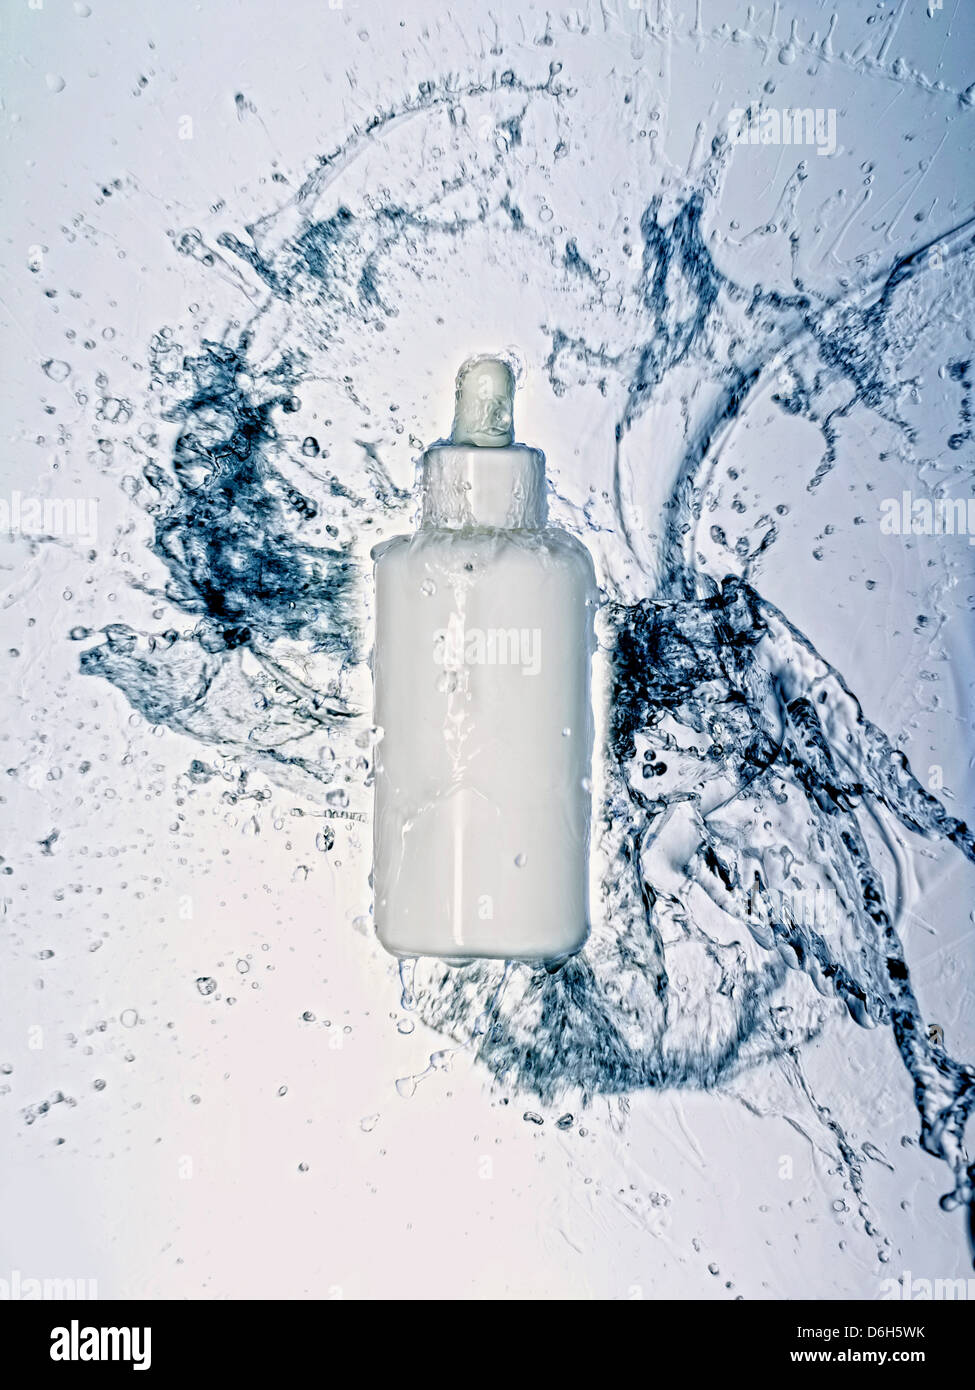 Water splashing on bottle Stock Photo